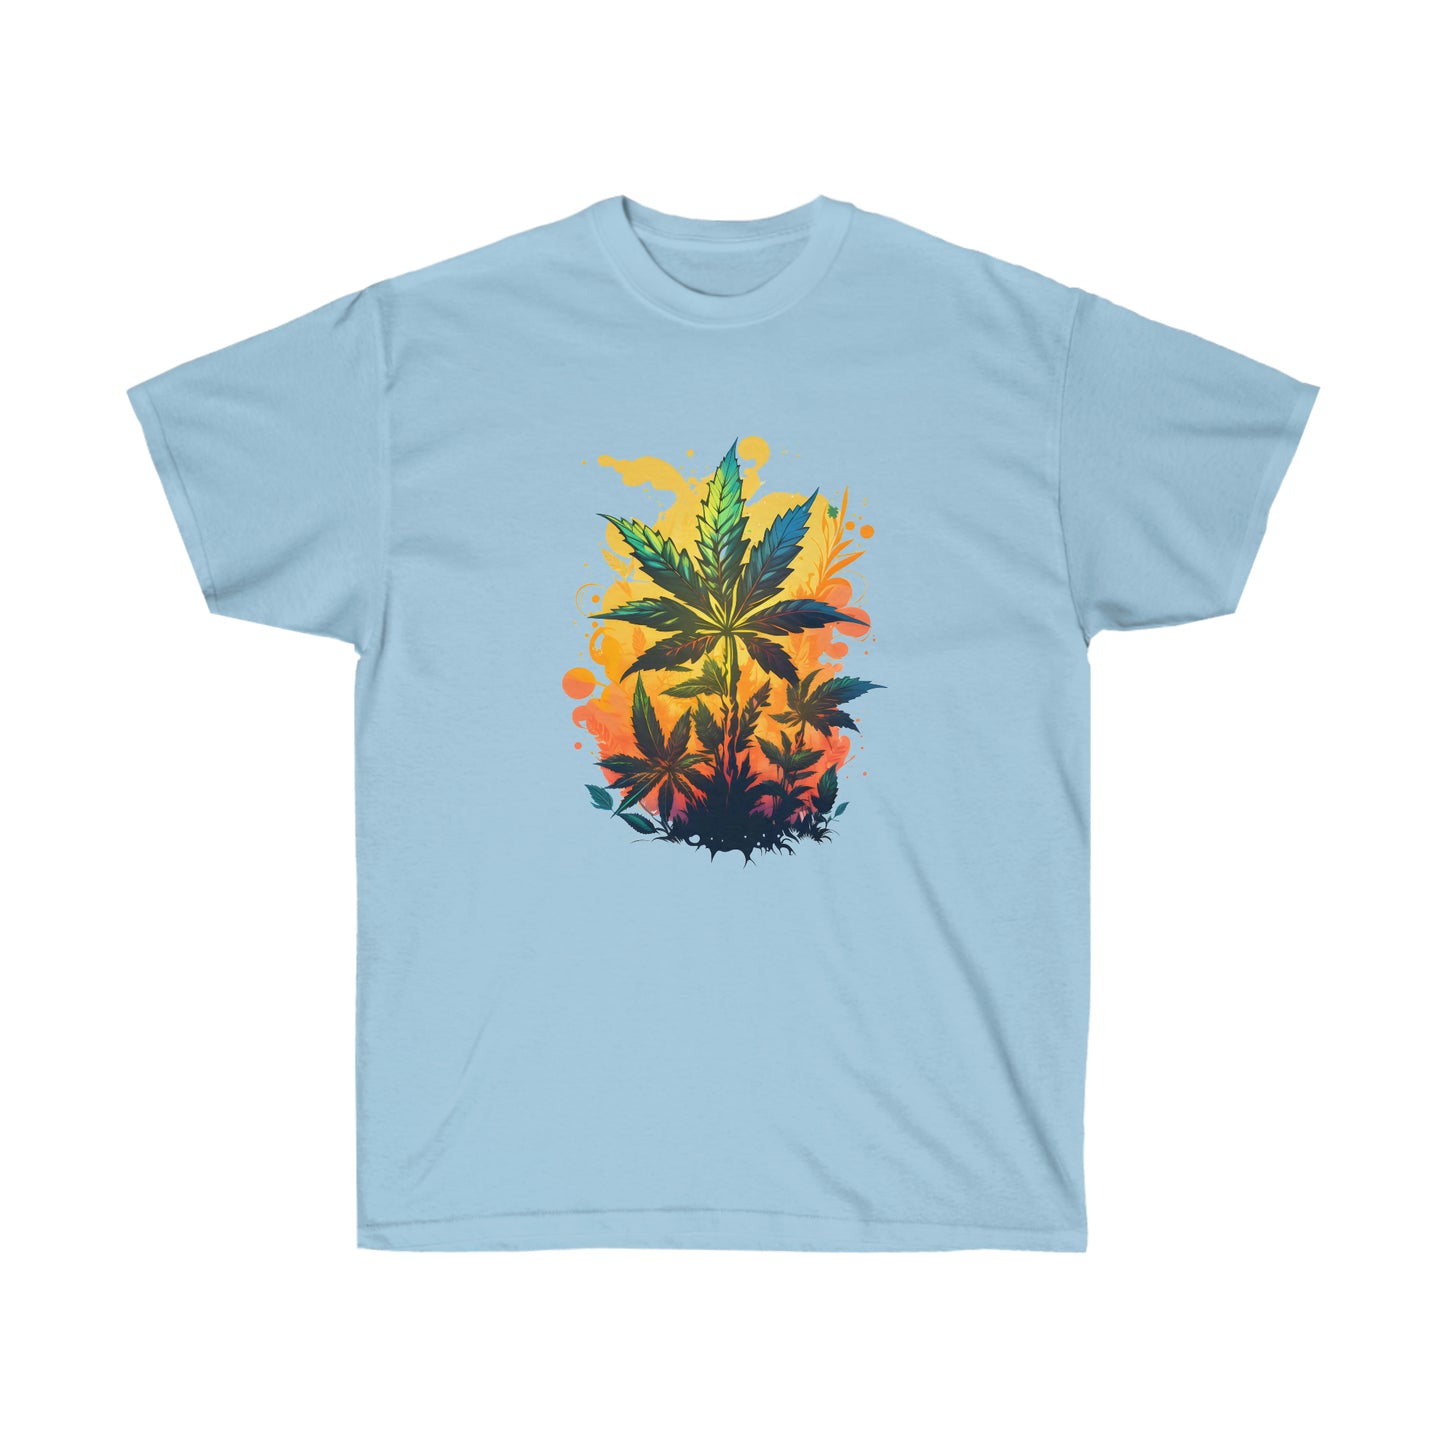 A light blue, warm paradise cannabis t-shirt